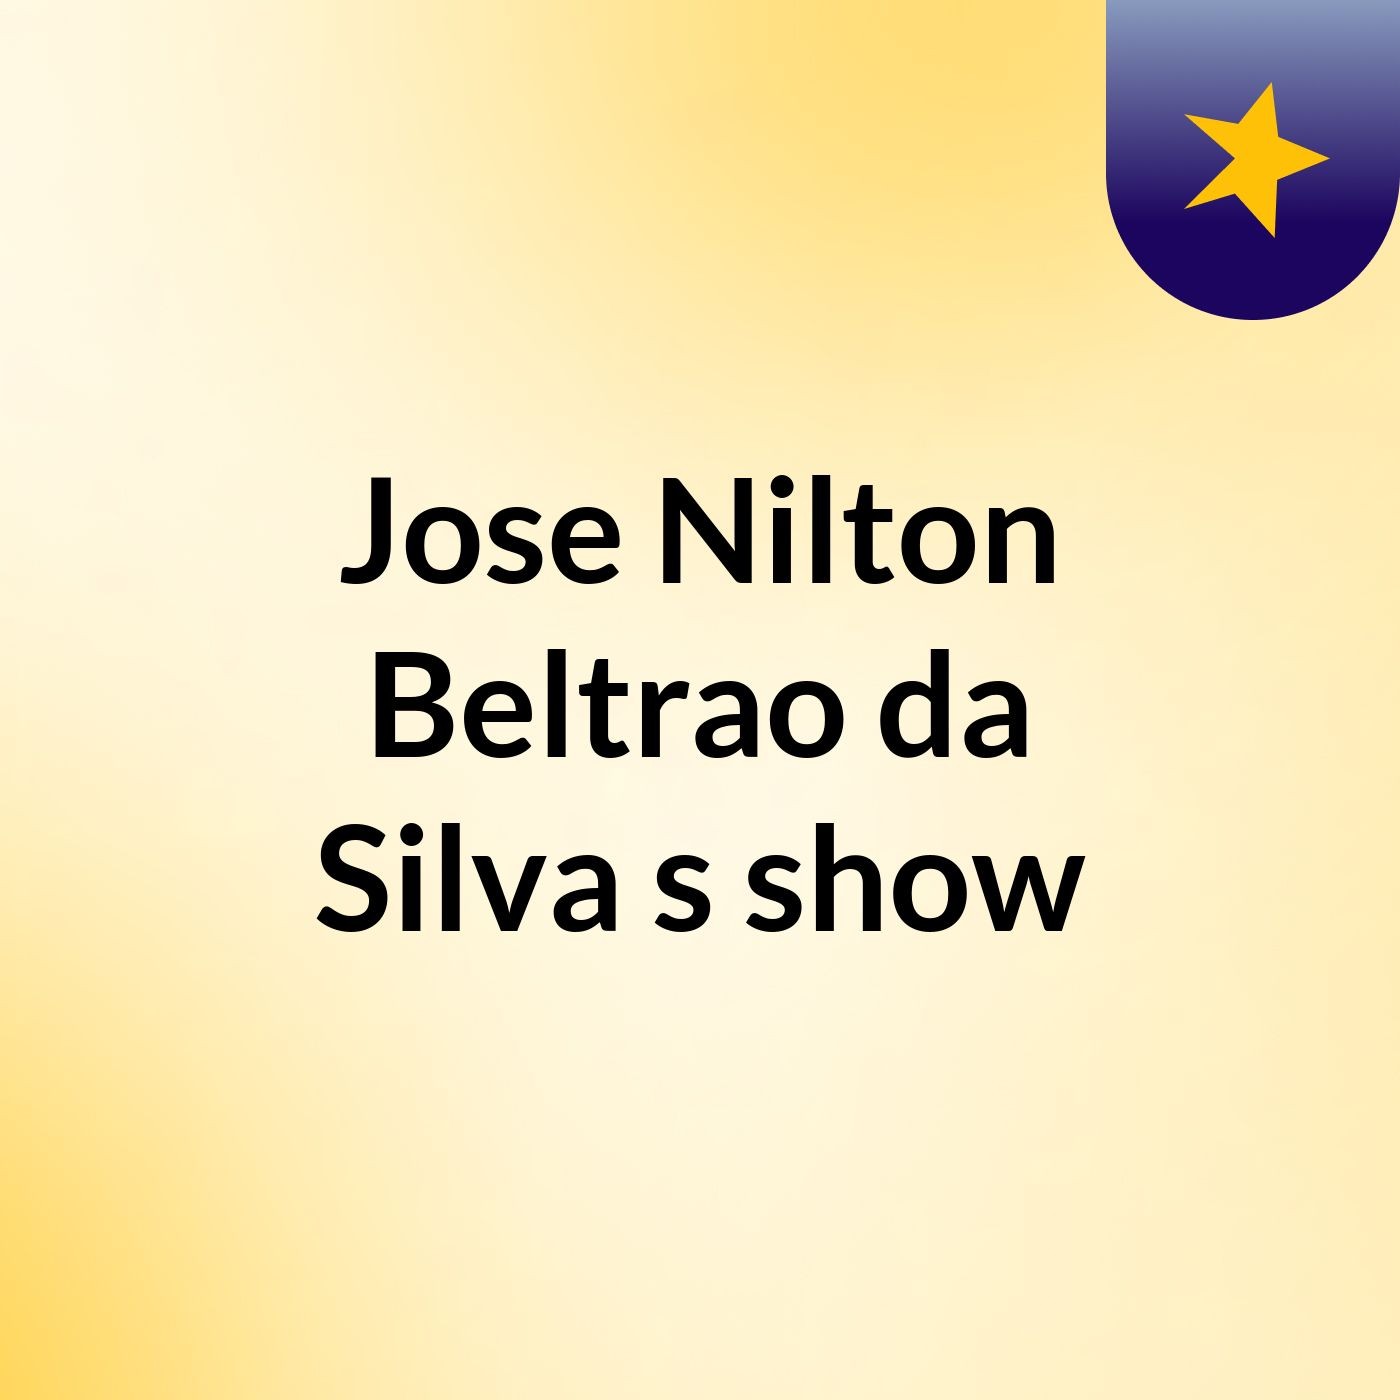 Jose Nilton Beltrao da Silva's show